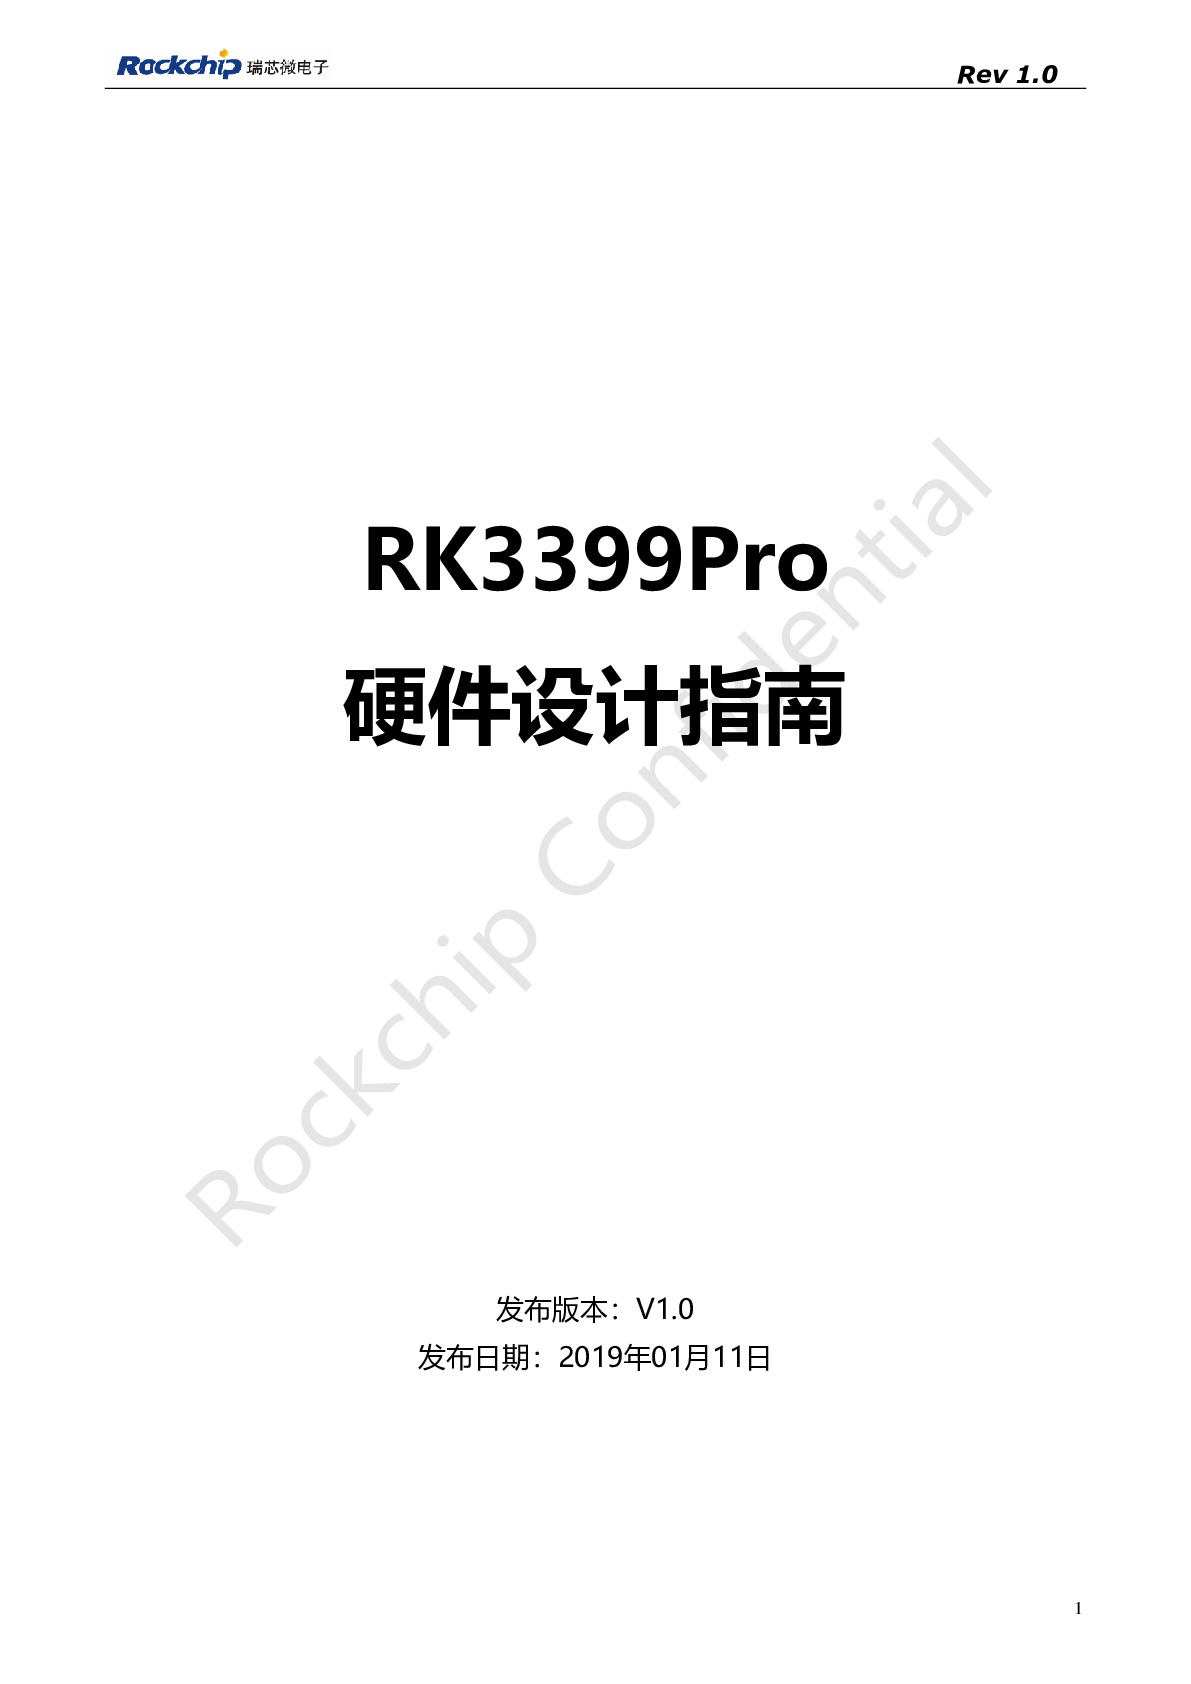 RK3399Pro硬件设计指南_设计指导手册